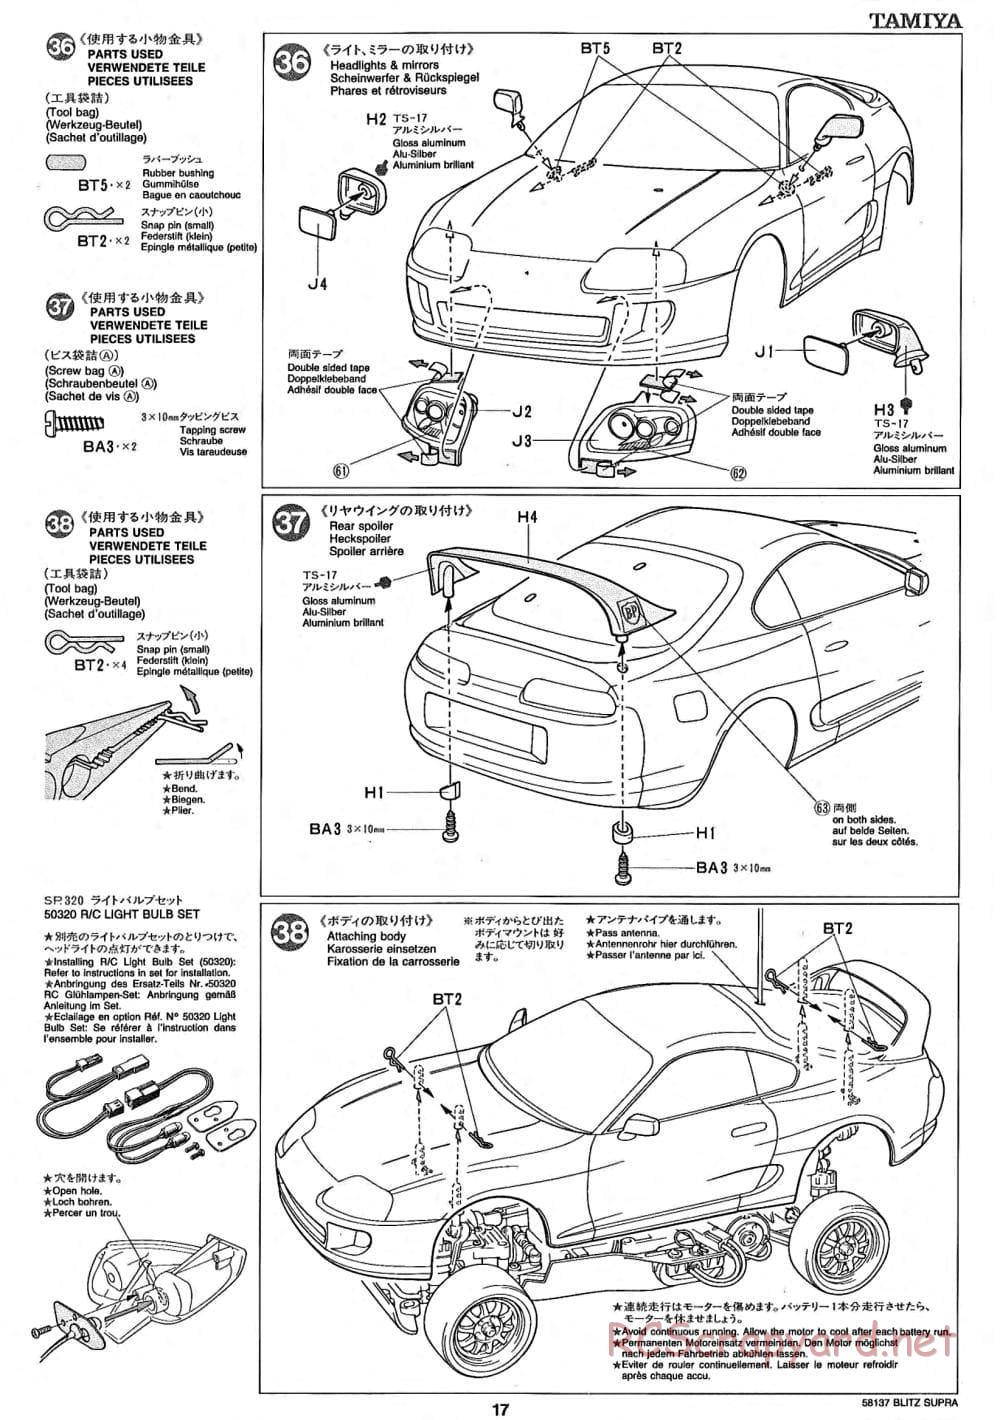 Tamiya - Blitz Toyota Supra Gr.N - TA-02 Chassis - Manual - Page 17